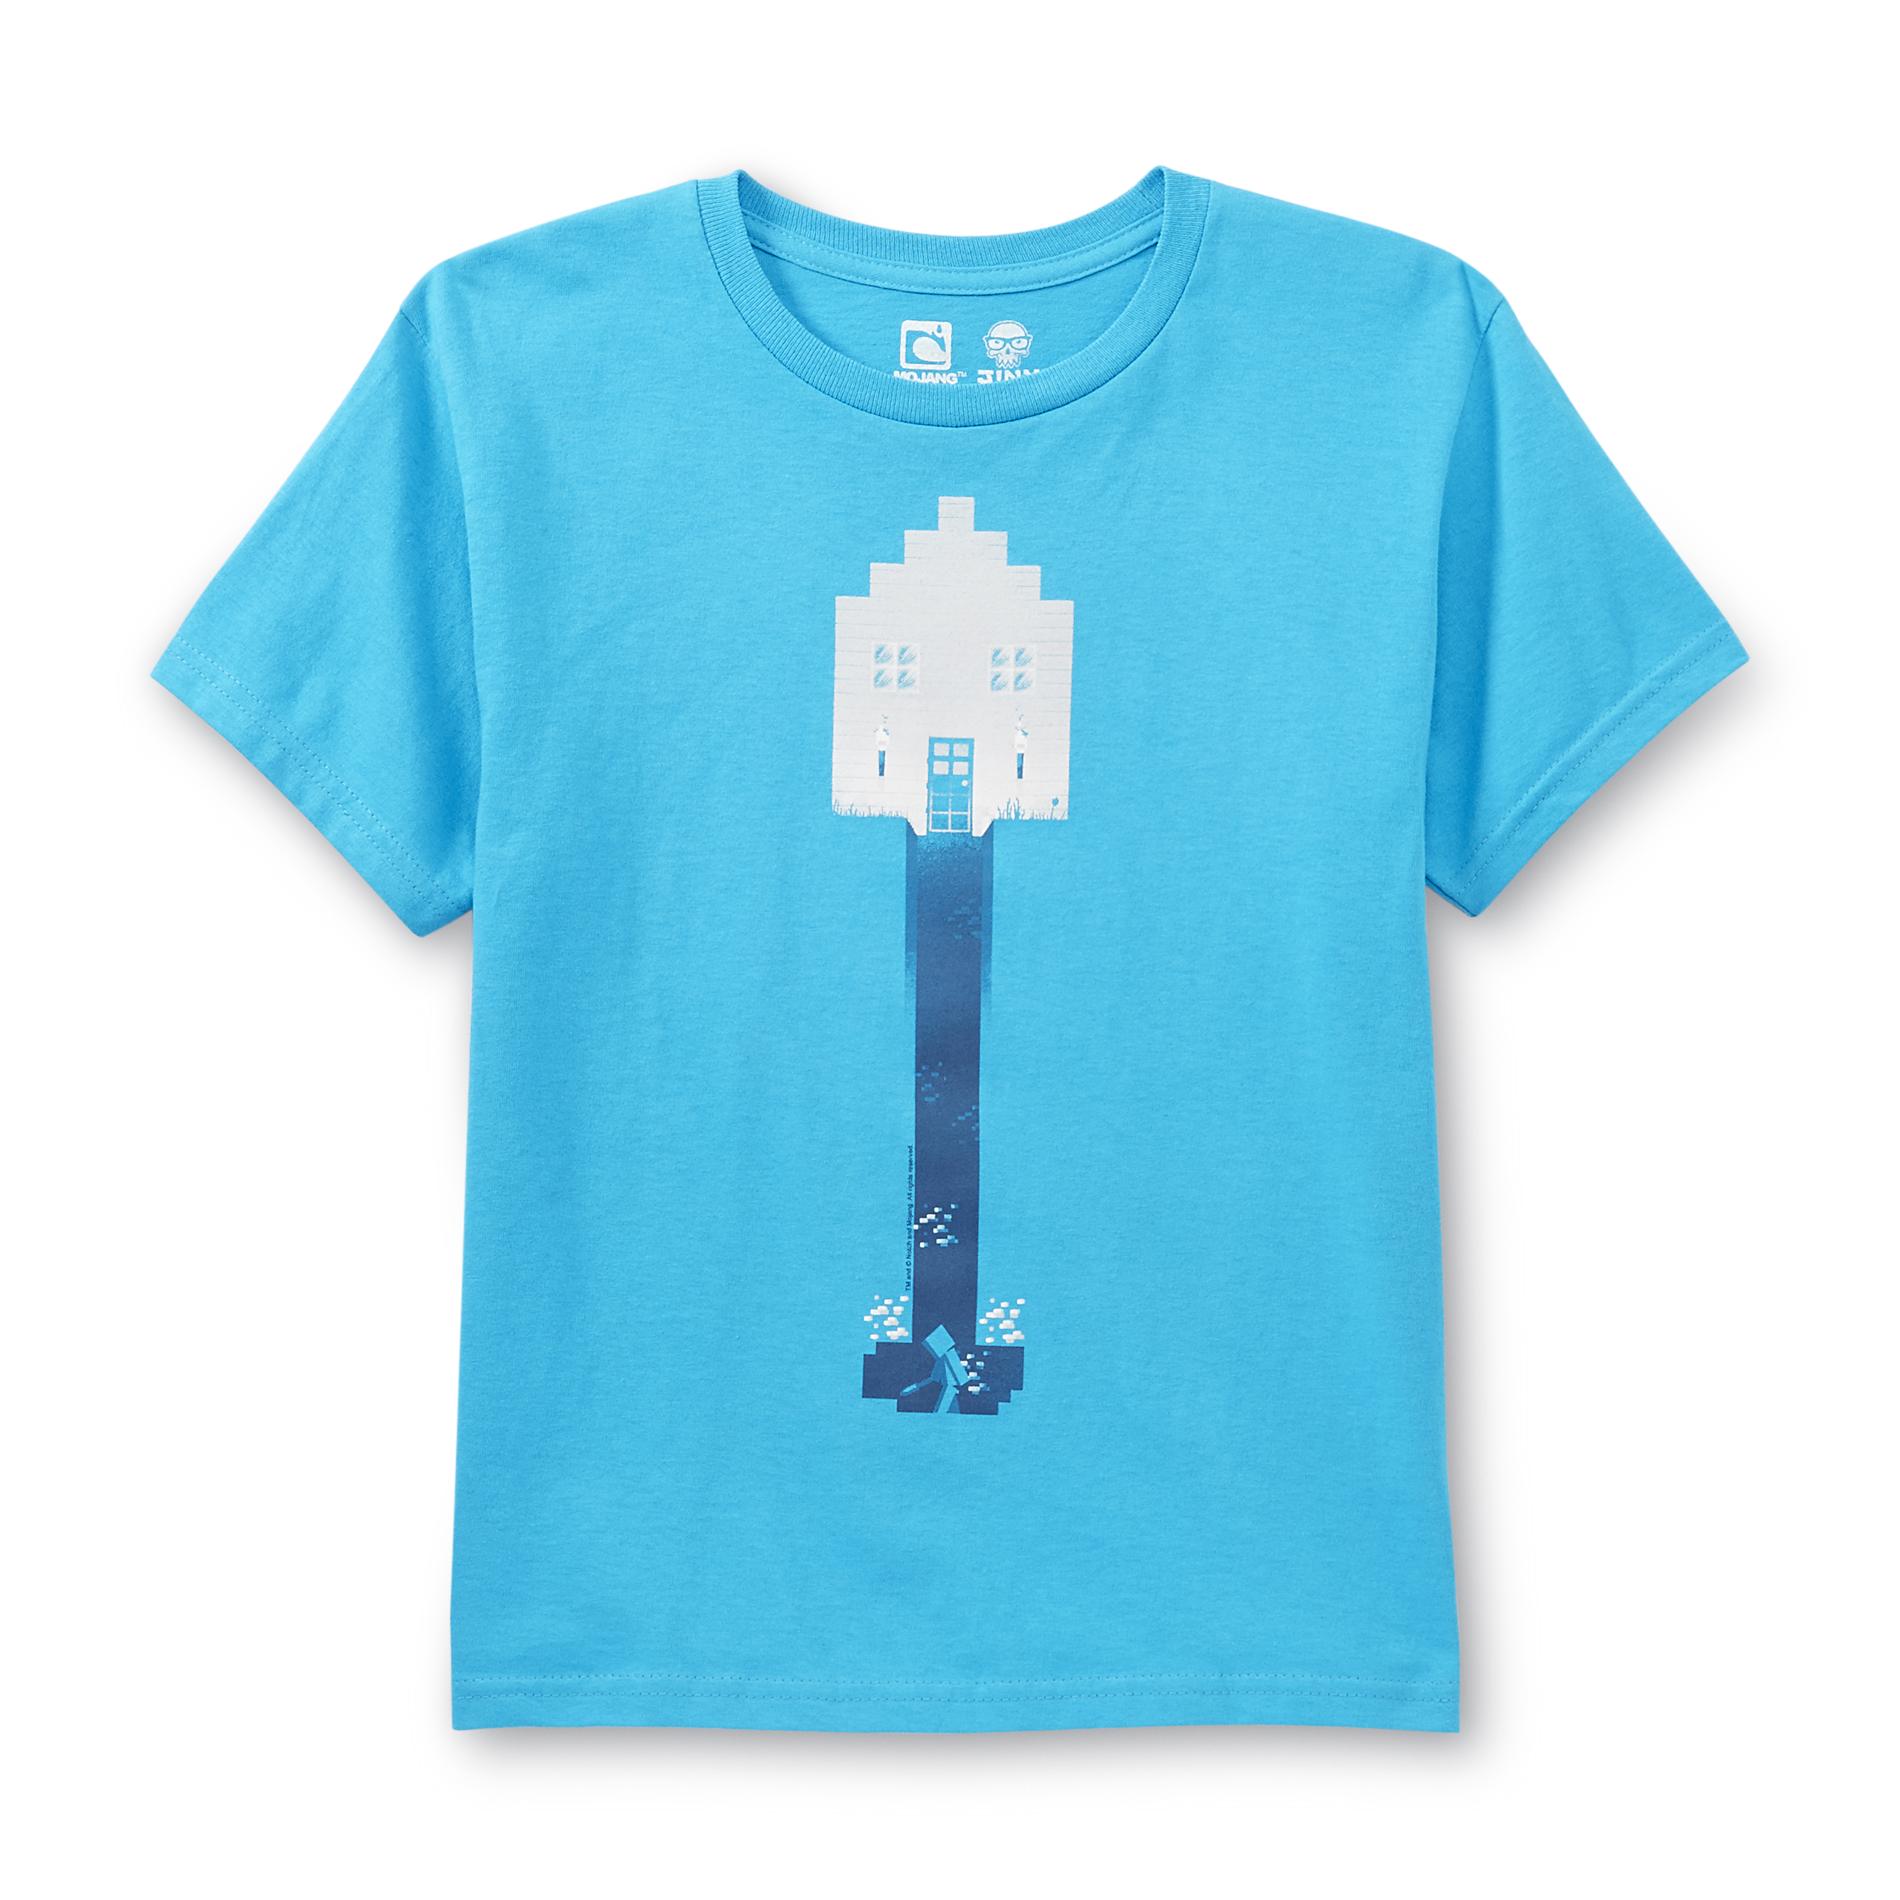 Minecraft Boy's Graphic T-Shirt - Shovel